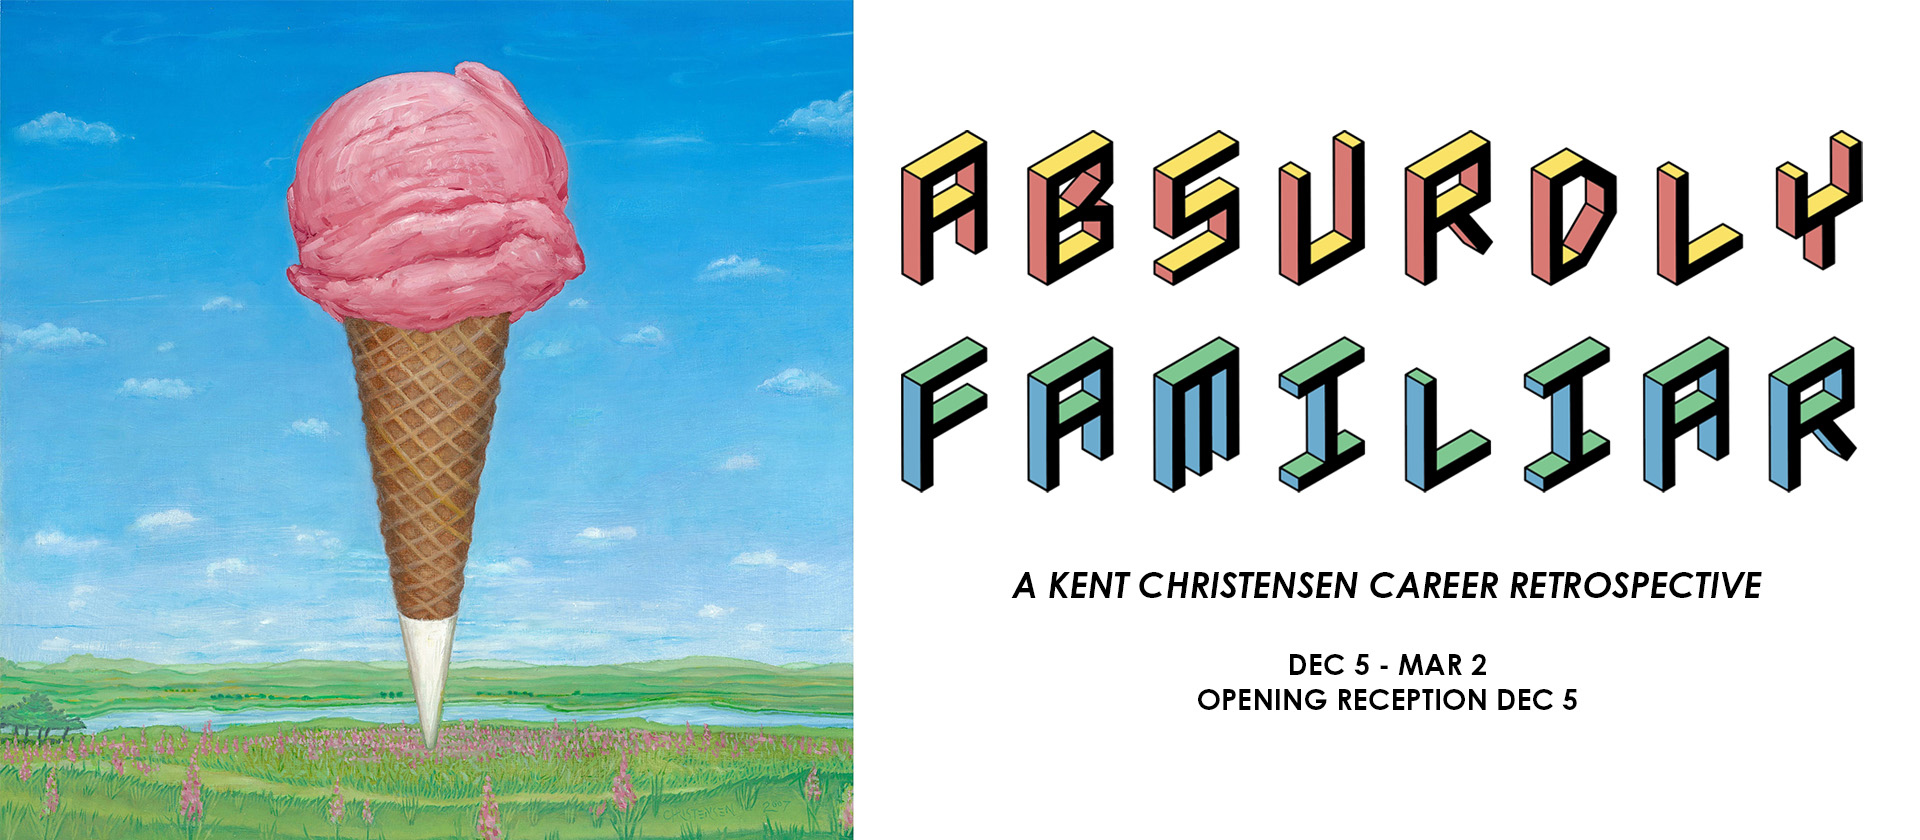 Absurdly Familiar - Dec. 5 – Mar. 2 - A Kent Christensen Career Retrospective - Opening Reception Dec. 5